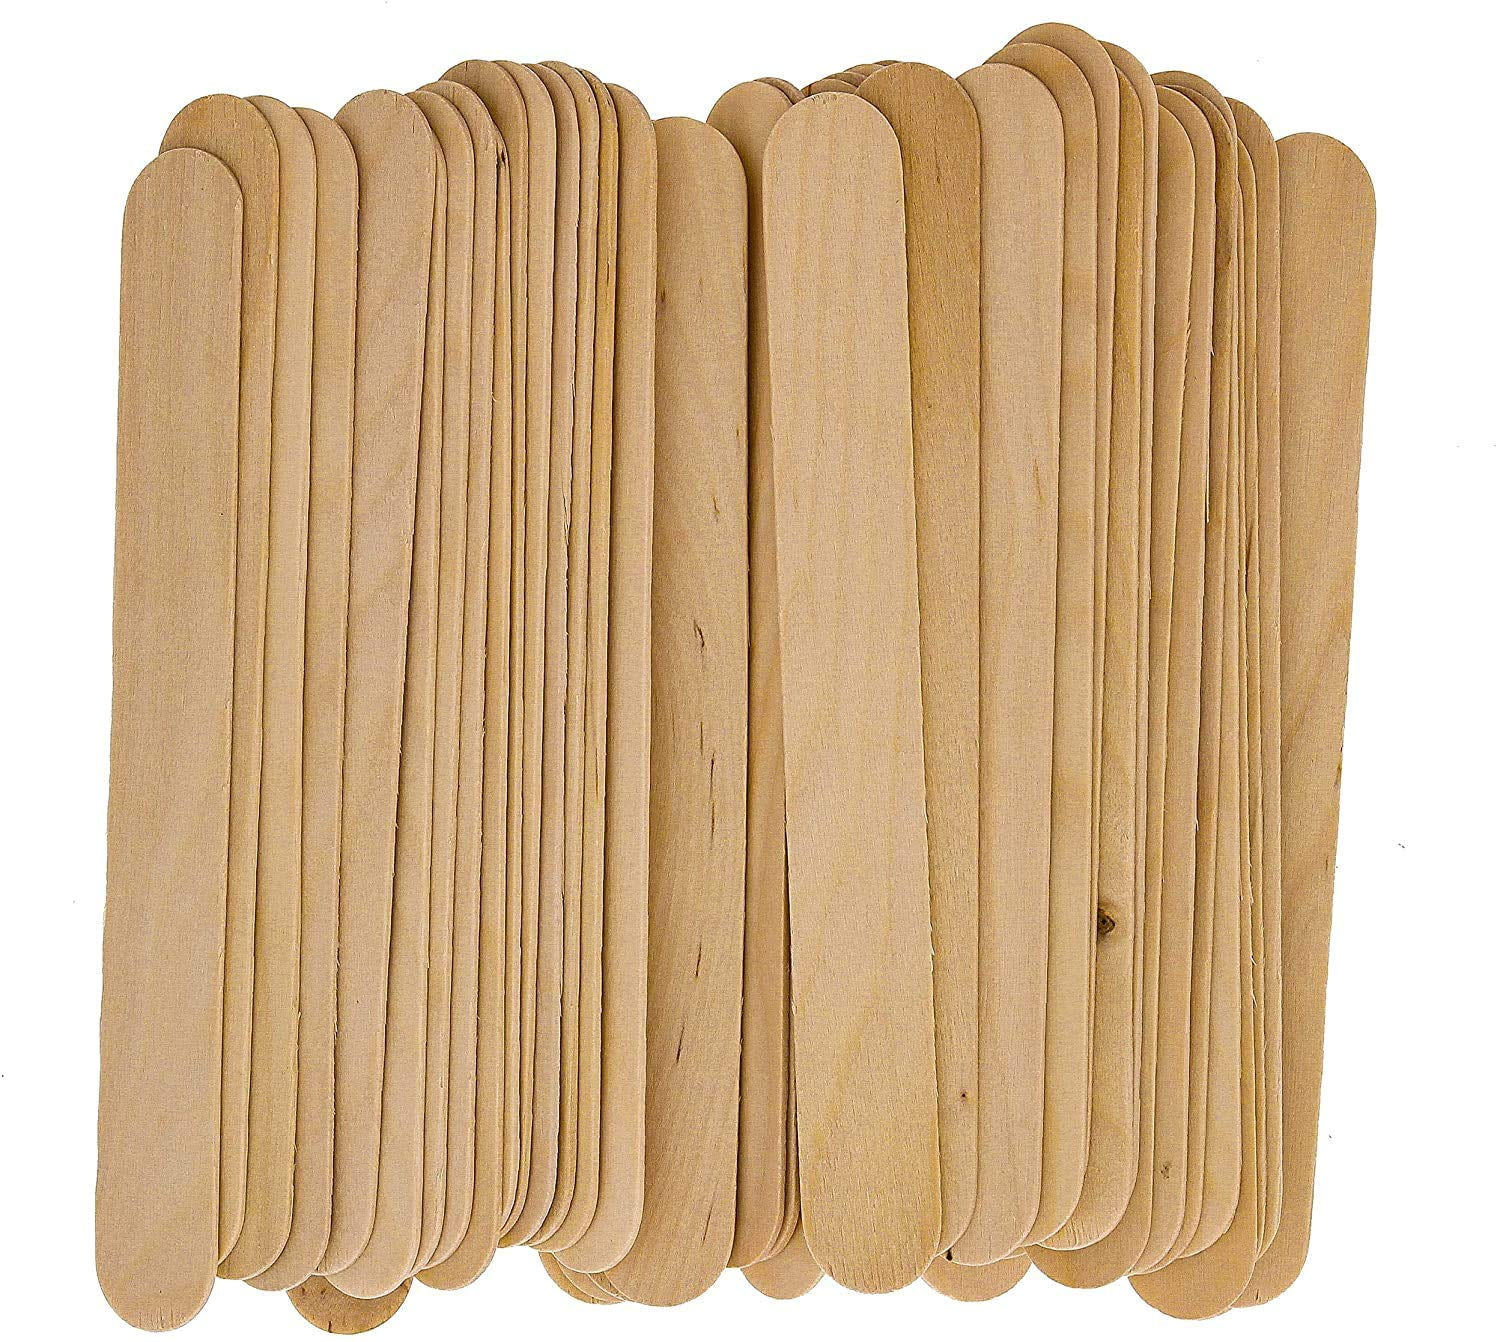 200pcs Wooden Wax Sticks, Multi-Purpose Waxing Sticks Spatulas For Body  Face Underarm Back Arms Bikini Hair Removal, Wooden Craft Sticks Suit  Stirring